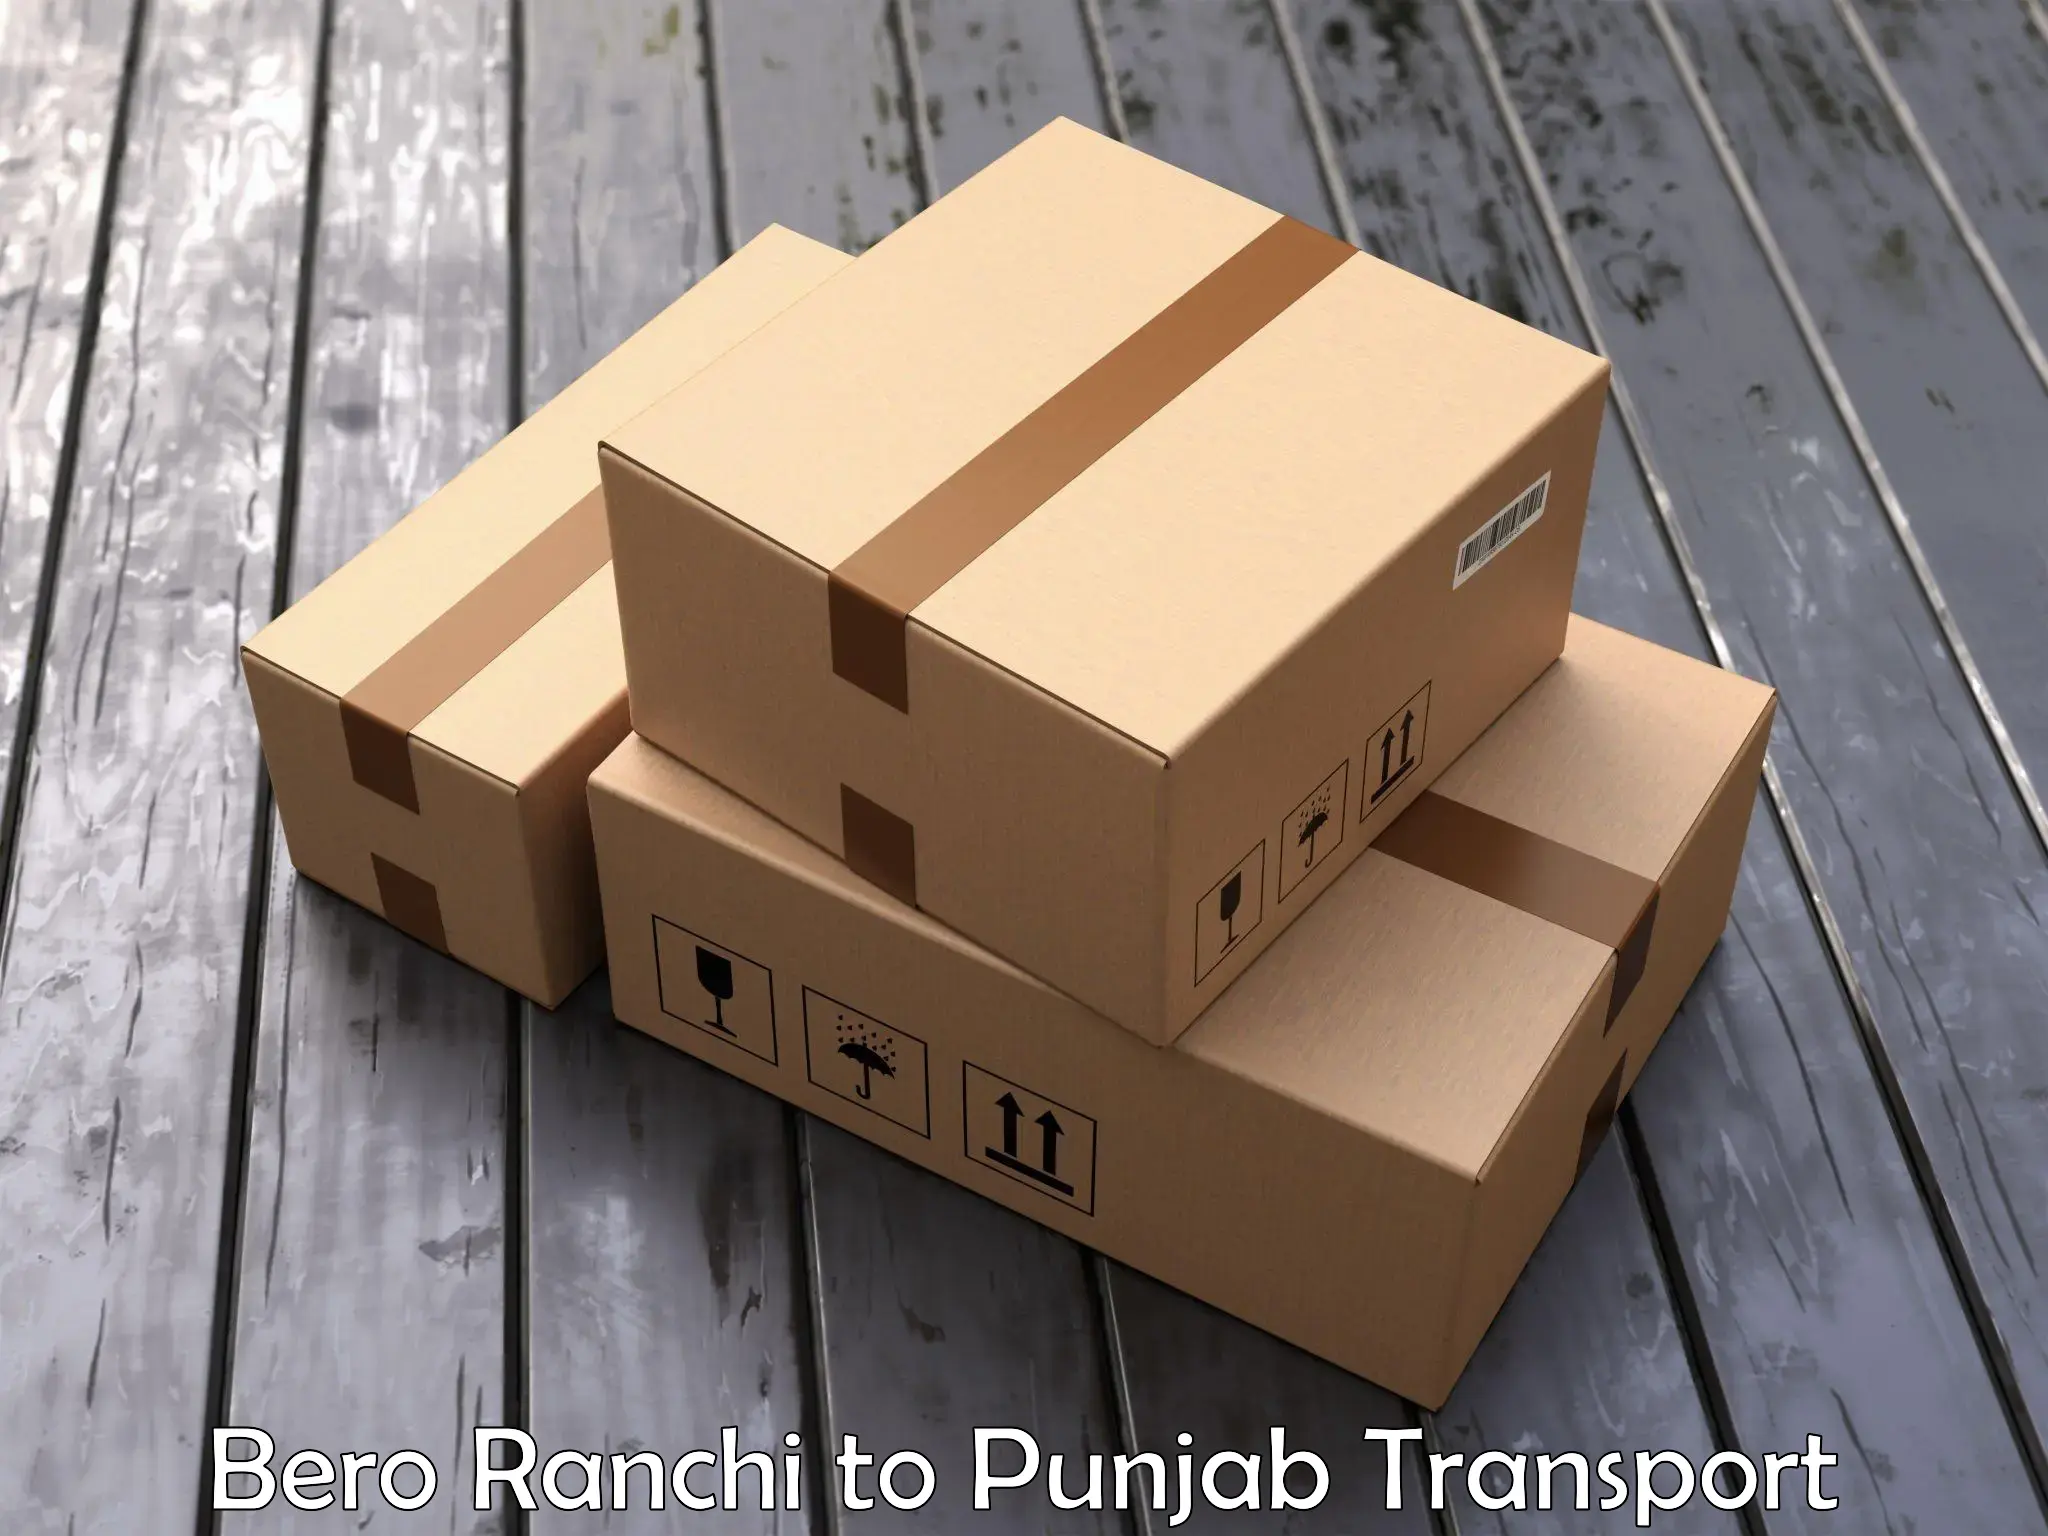 Truck transport companies in India Bero Ranchi to Garhshankar